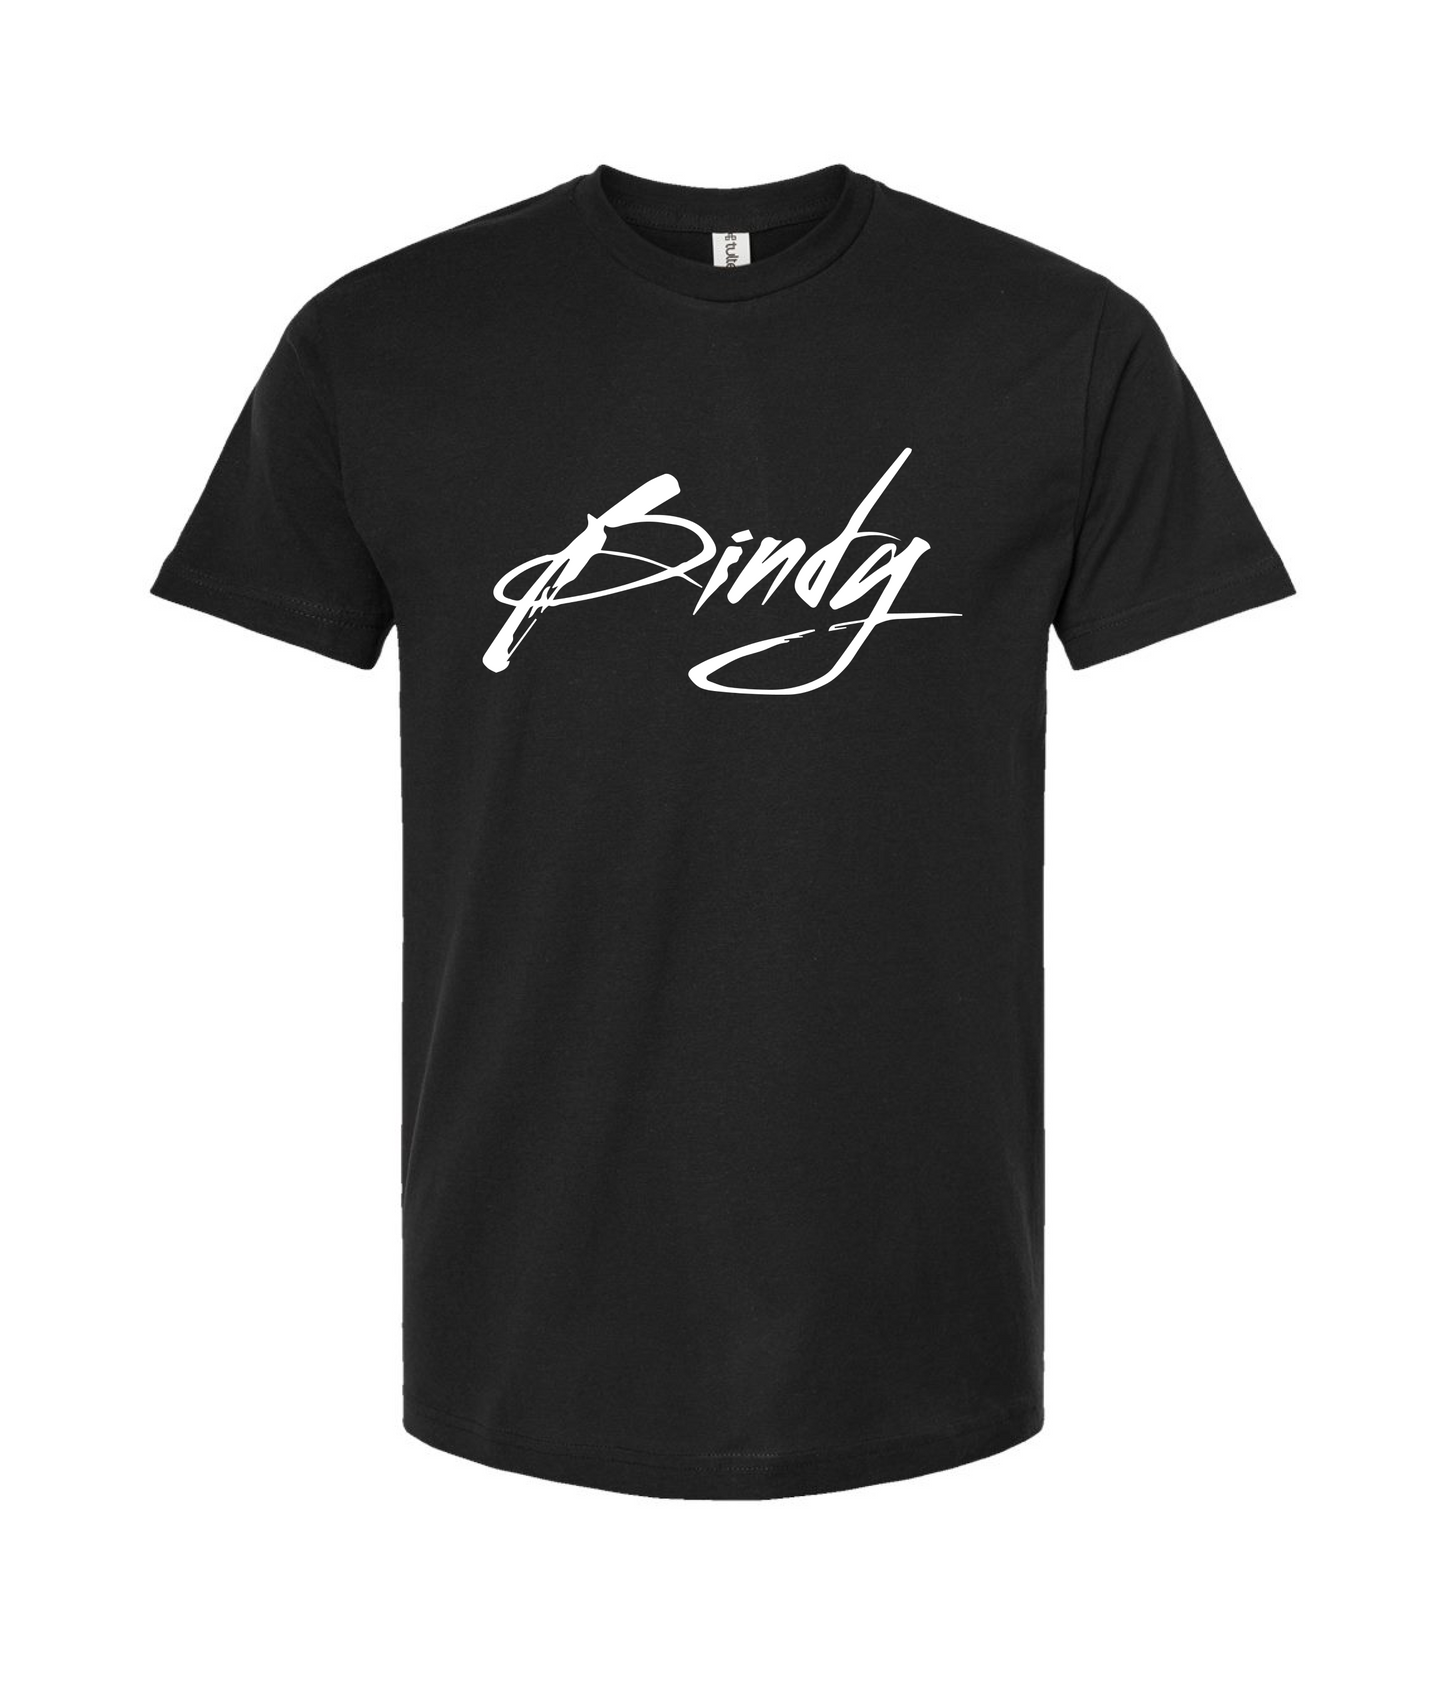 Bindy - Logo - Black T-Shirt